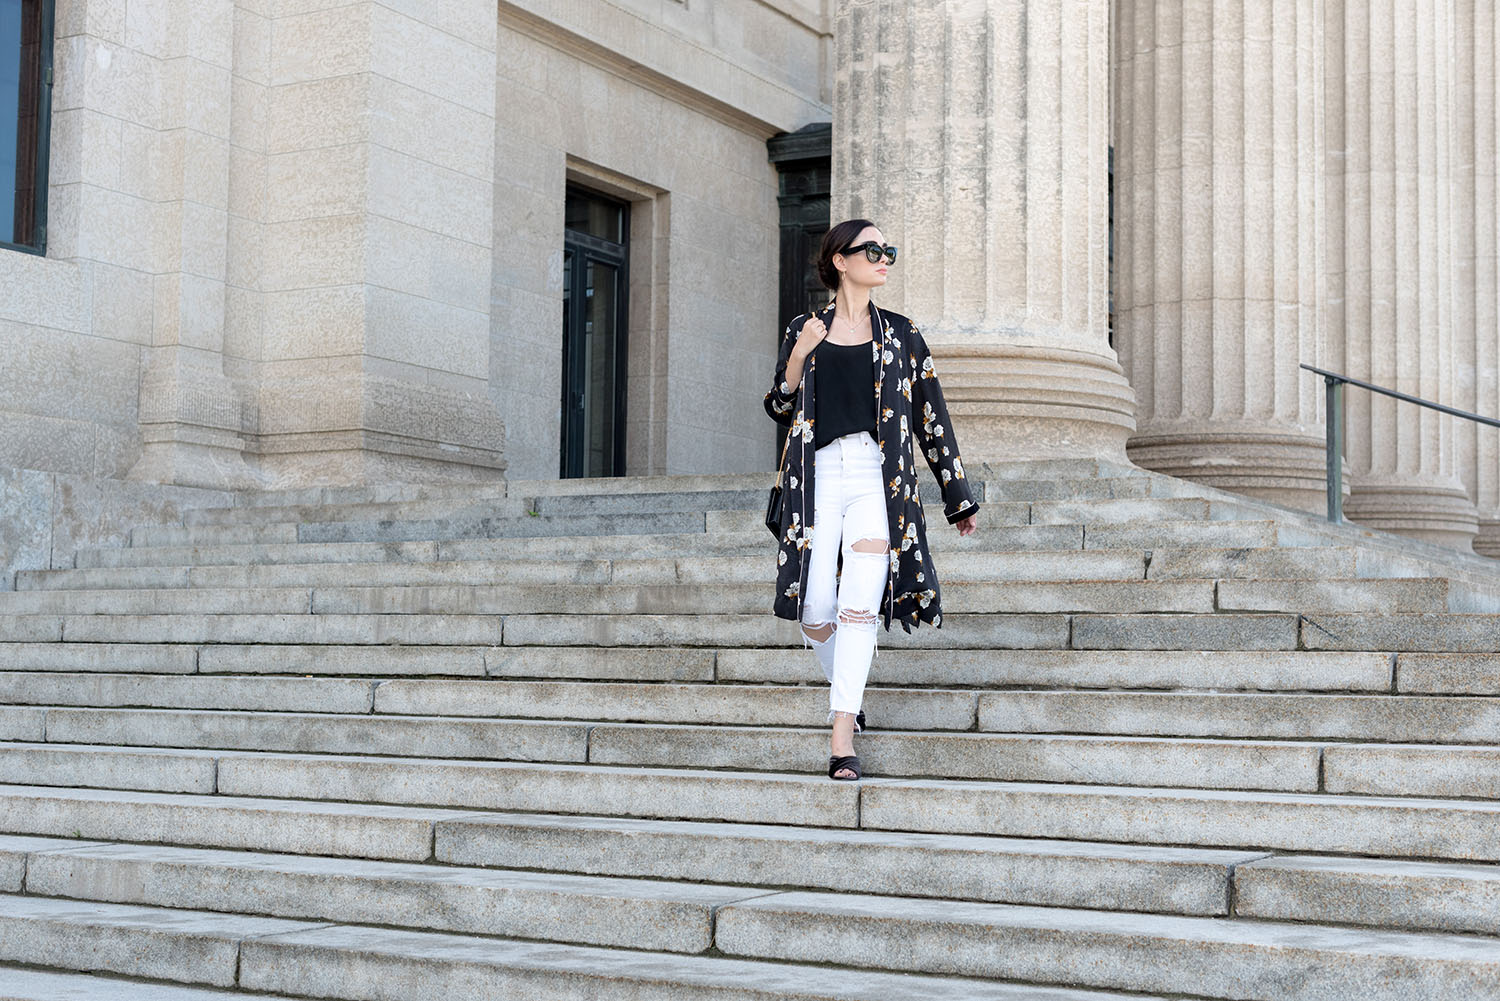 Top Winnipeg fashion blogger Cee Fardoe of Coco & Vera walks down the stairs at the Manitoba Legislature wearing a Zara black kimono and white Grlfrnd jeans